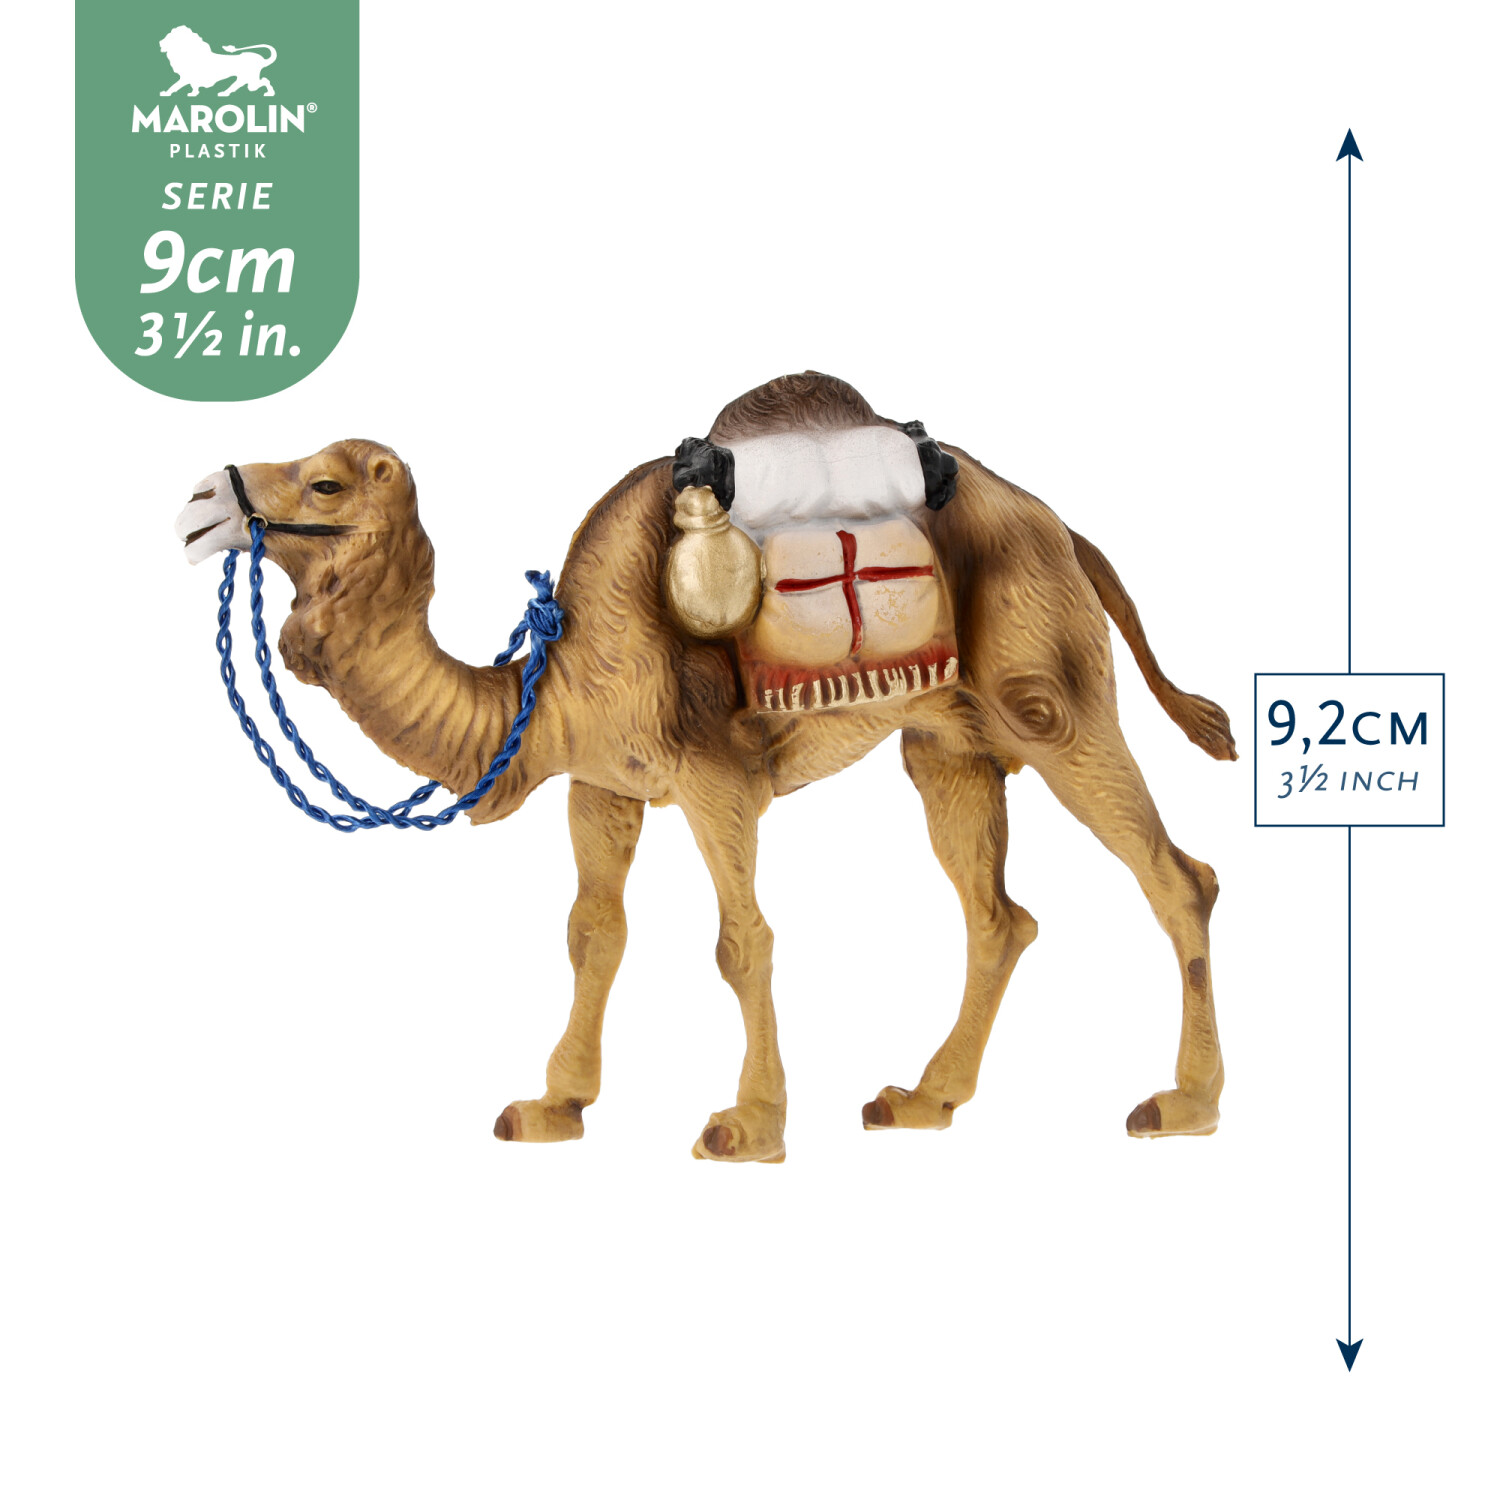 Bactrian camel - Marolin Plastik - Resin Nativity figure - made in Germany